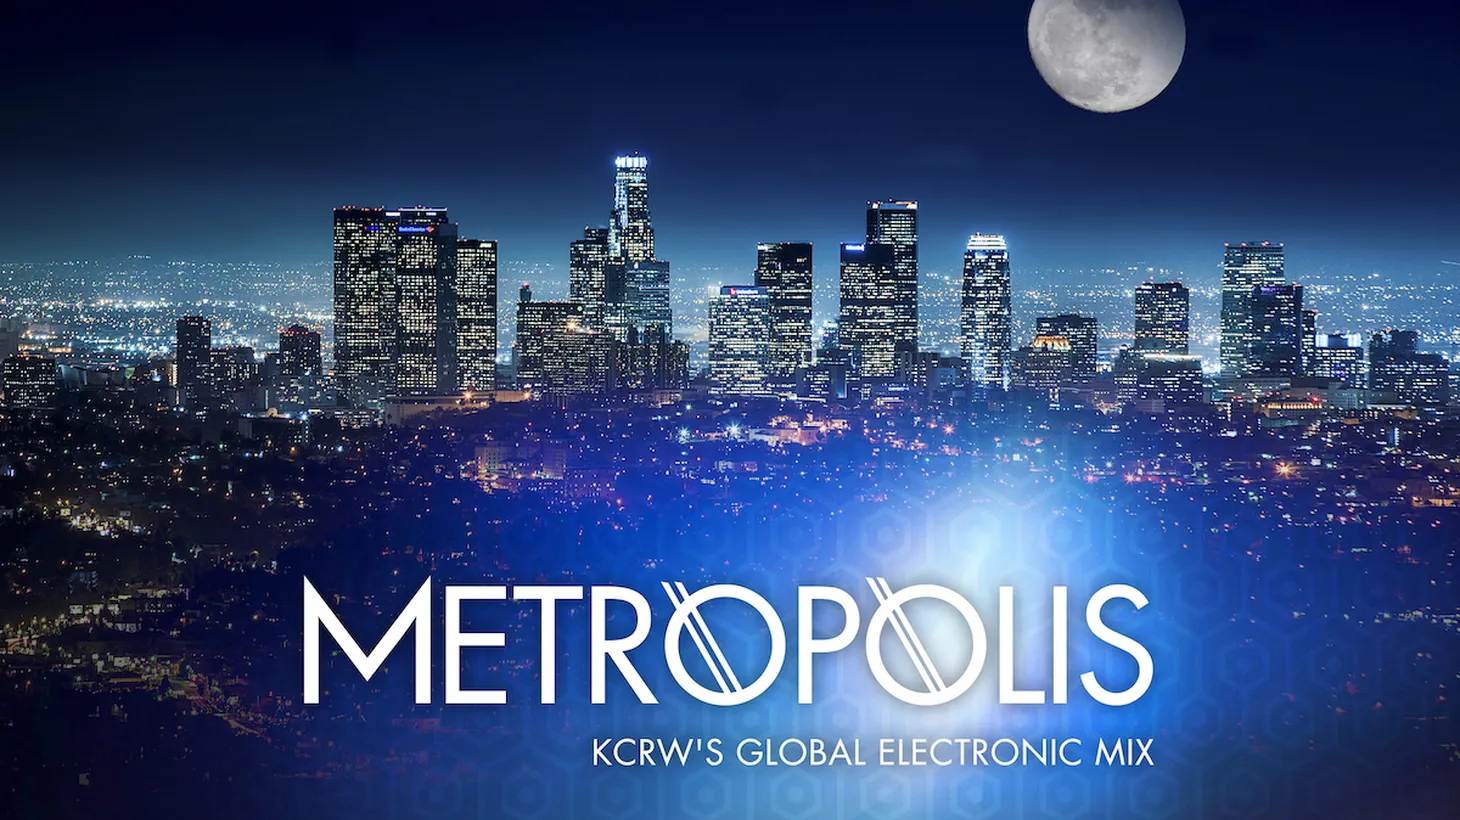 Metropolis playlist, November 20, 2021.